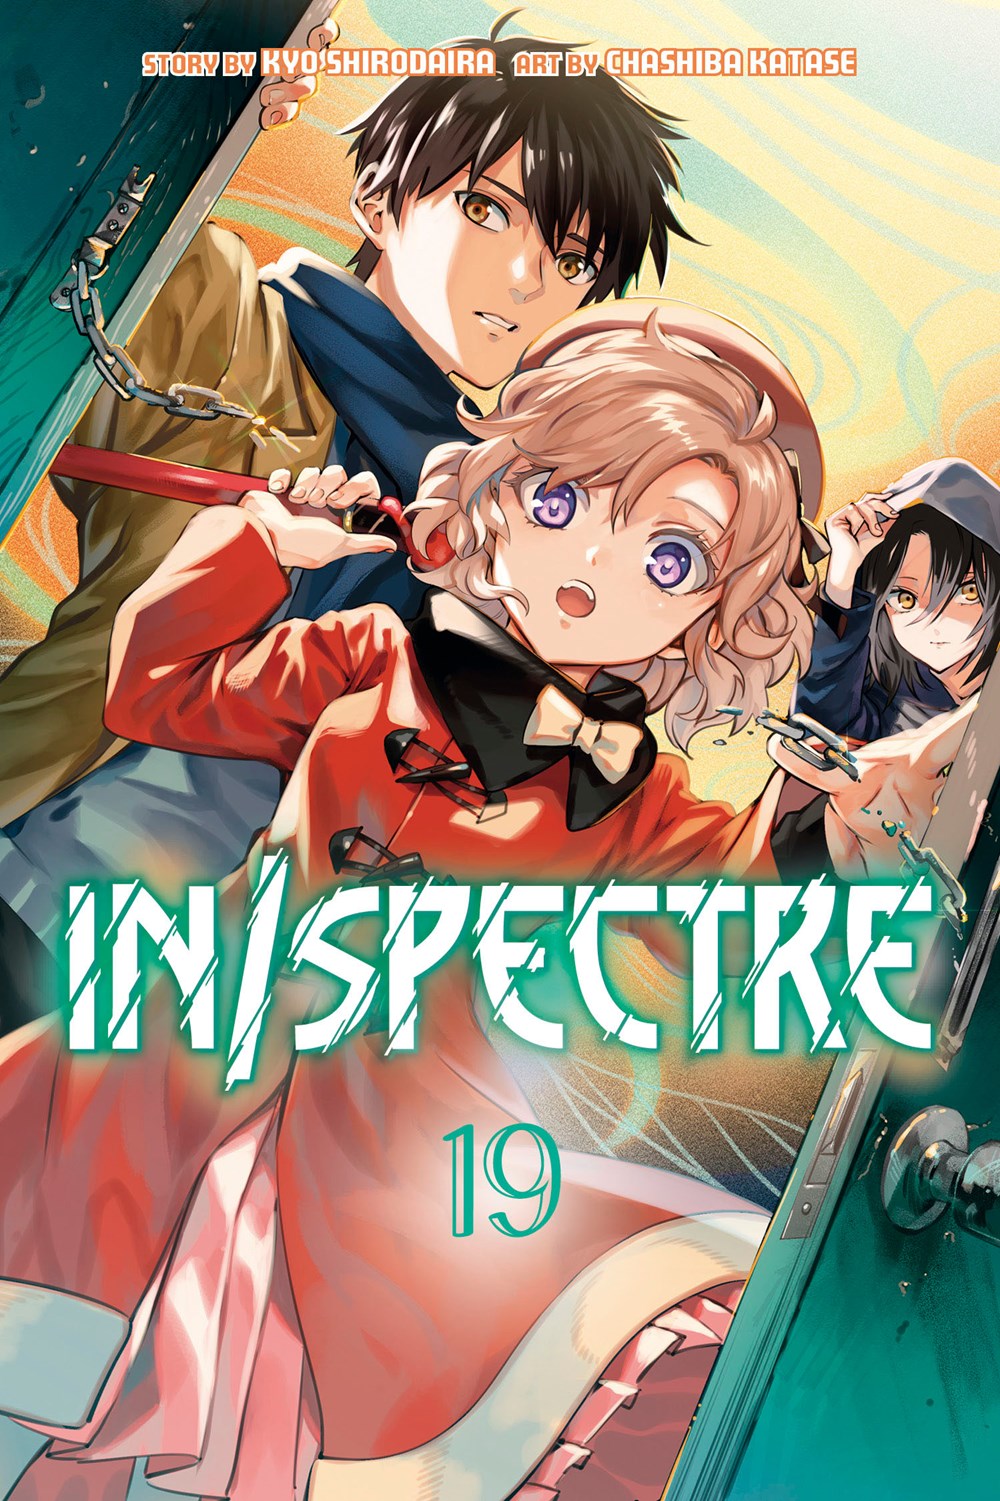 Manga Addict  In spectre, In spectre manga, Manga